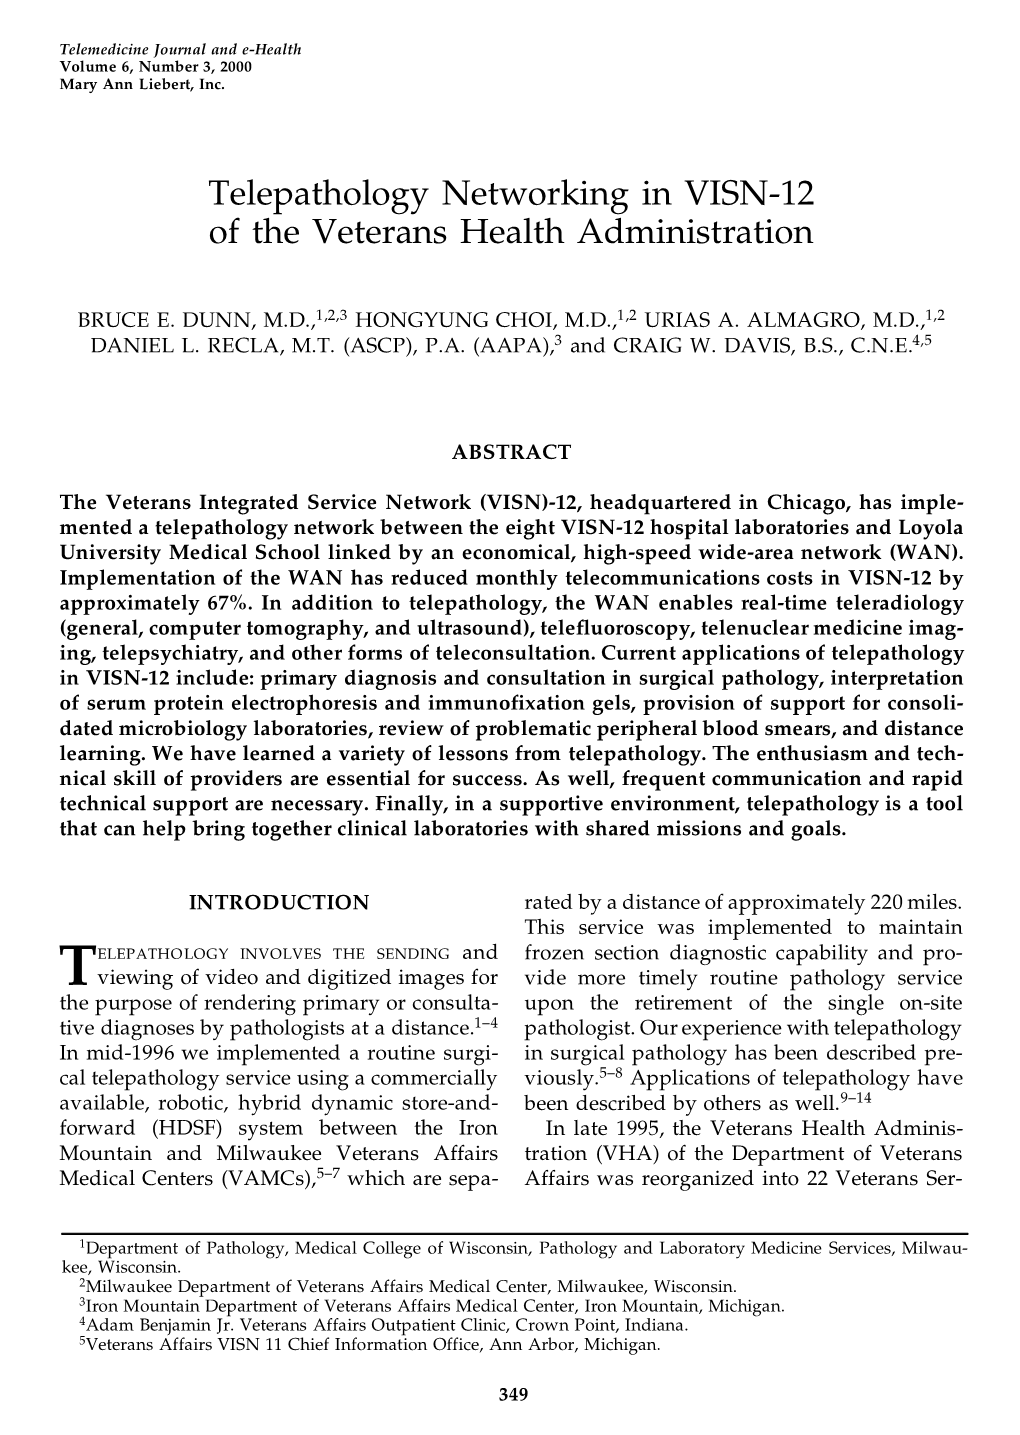 Telepathology Networking in VISN-12 of the Veterans Health Administration